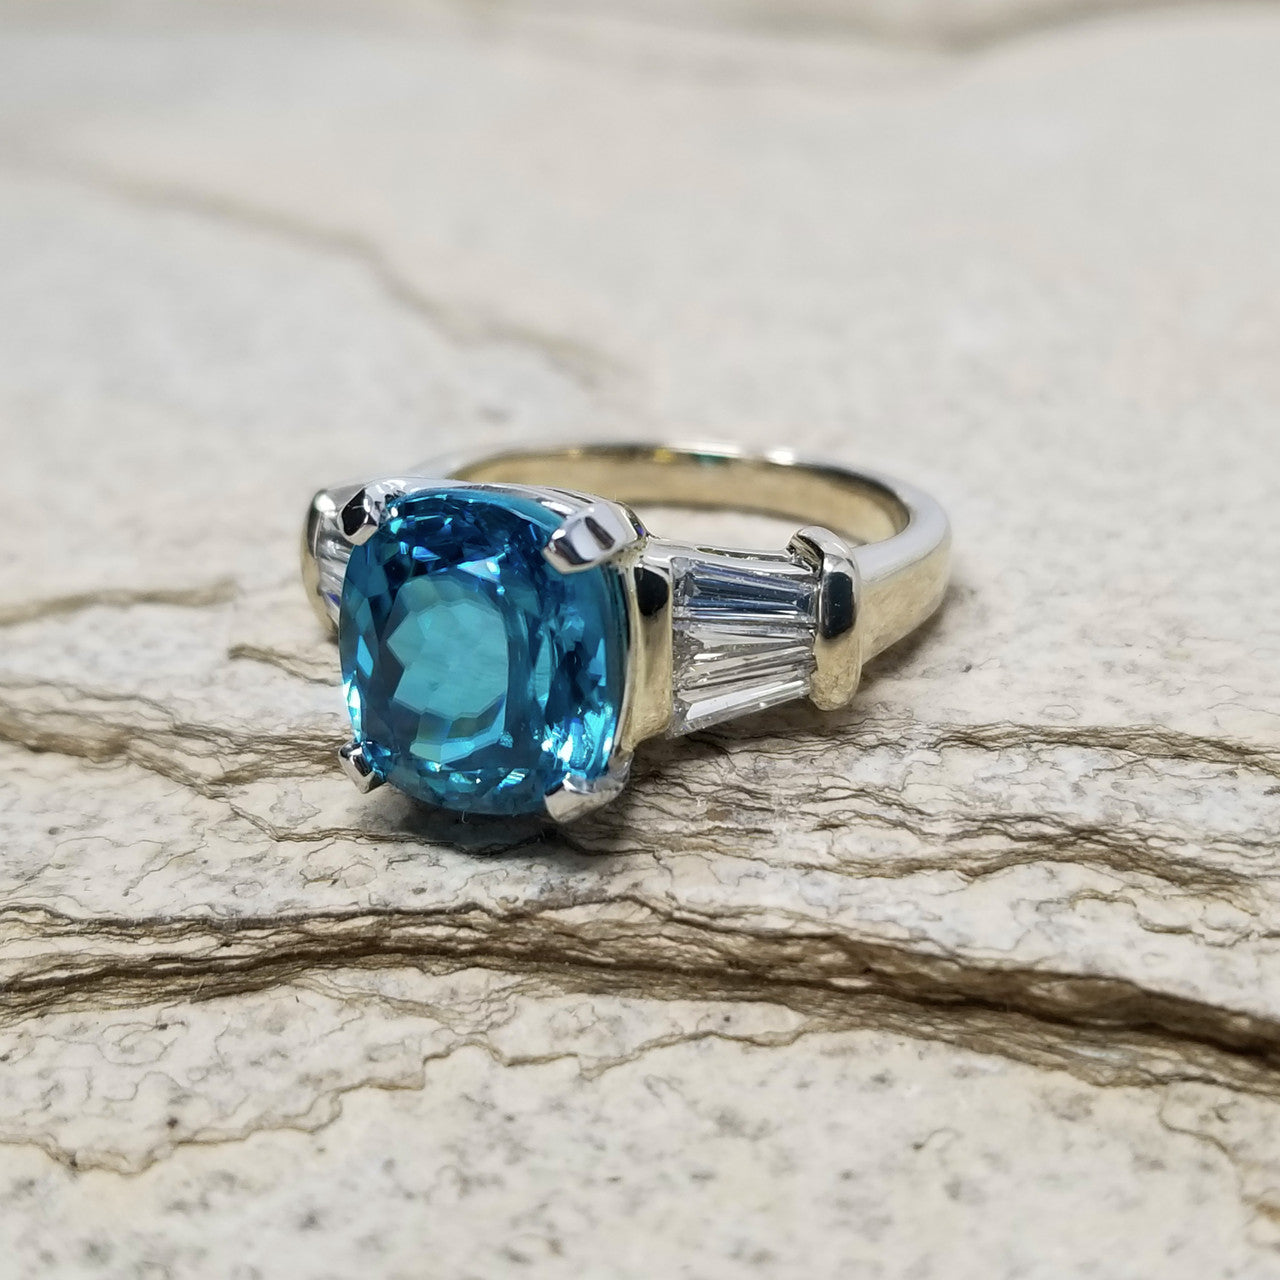 Blue Zircon and Diamond 18kt Classic Ring by Cynthia Scott Jewelry